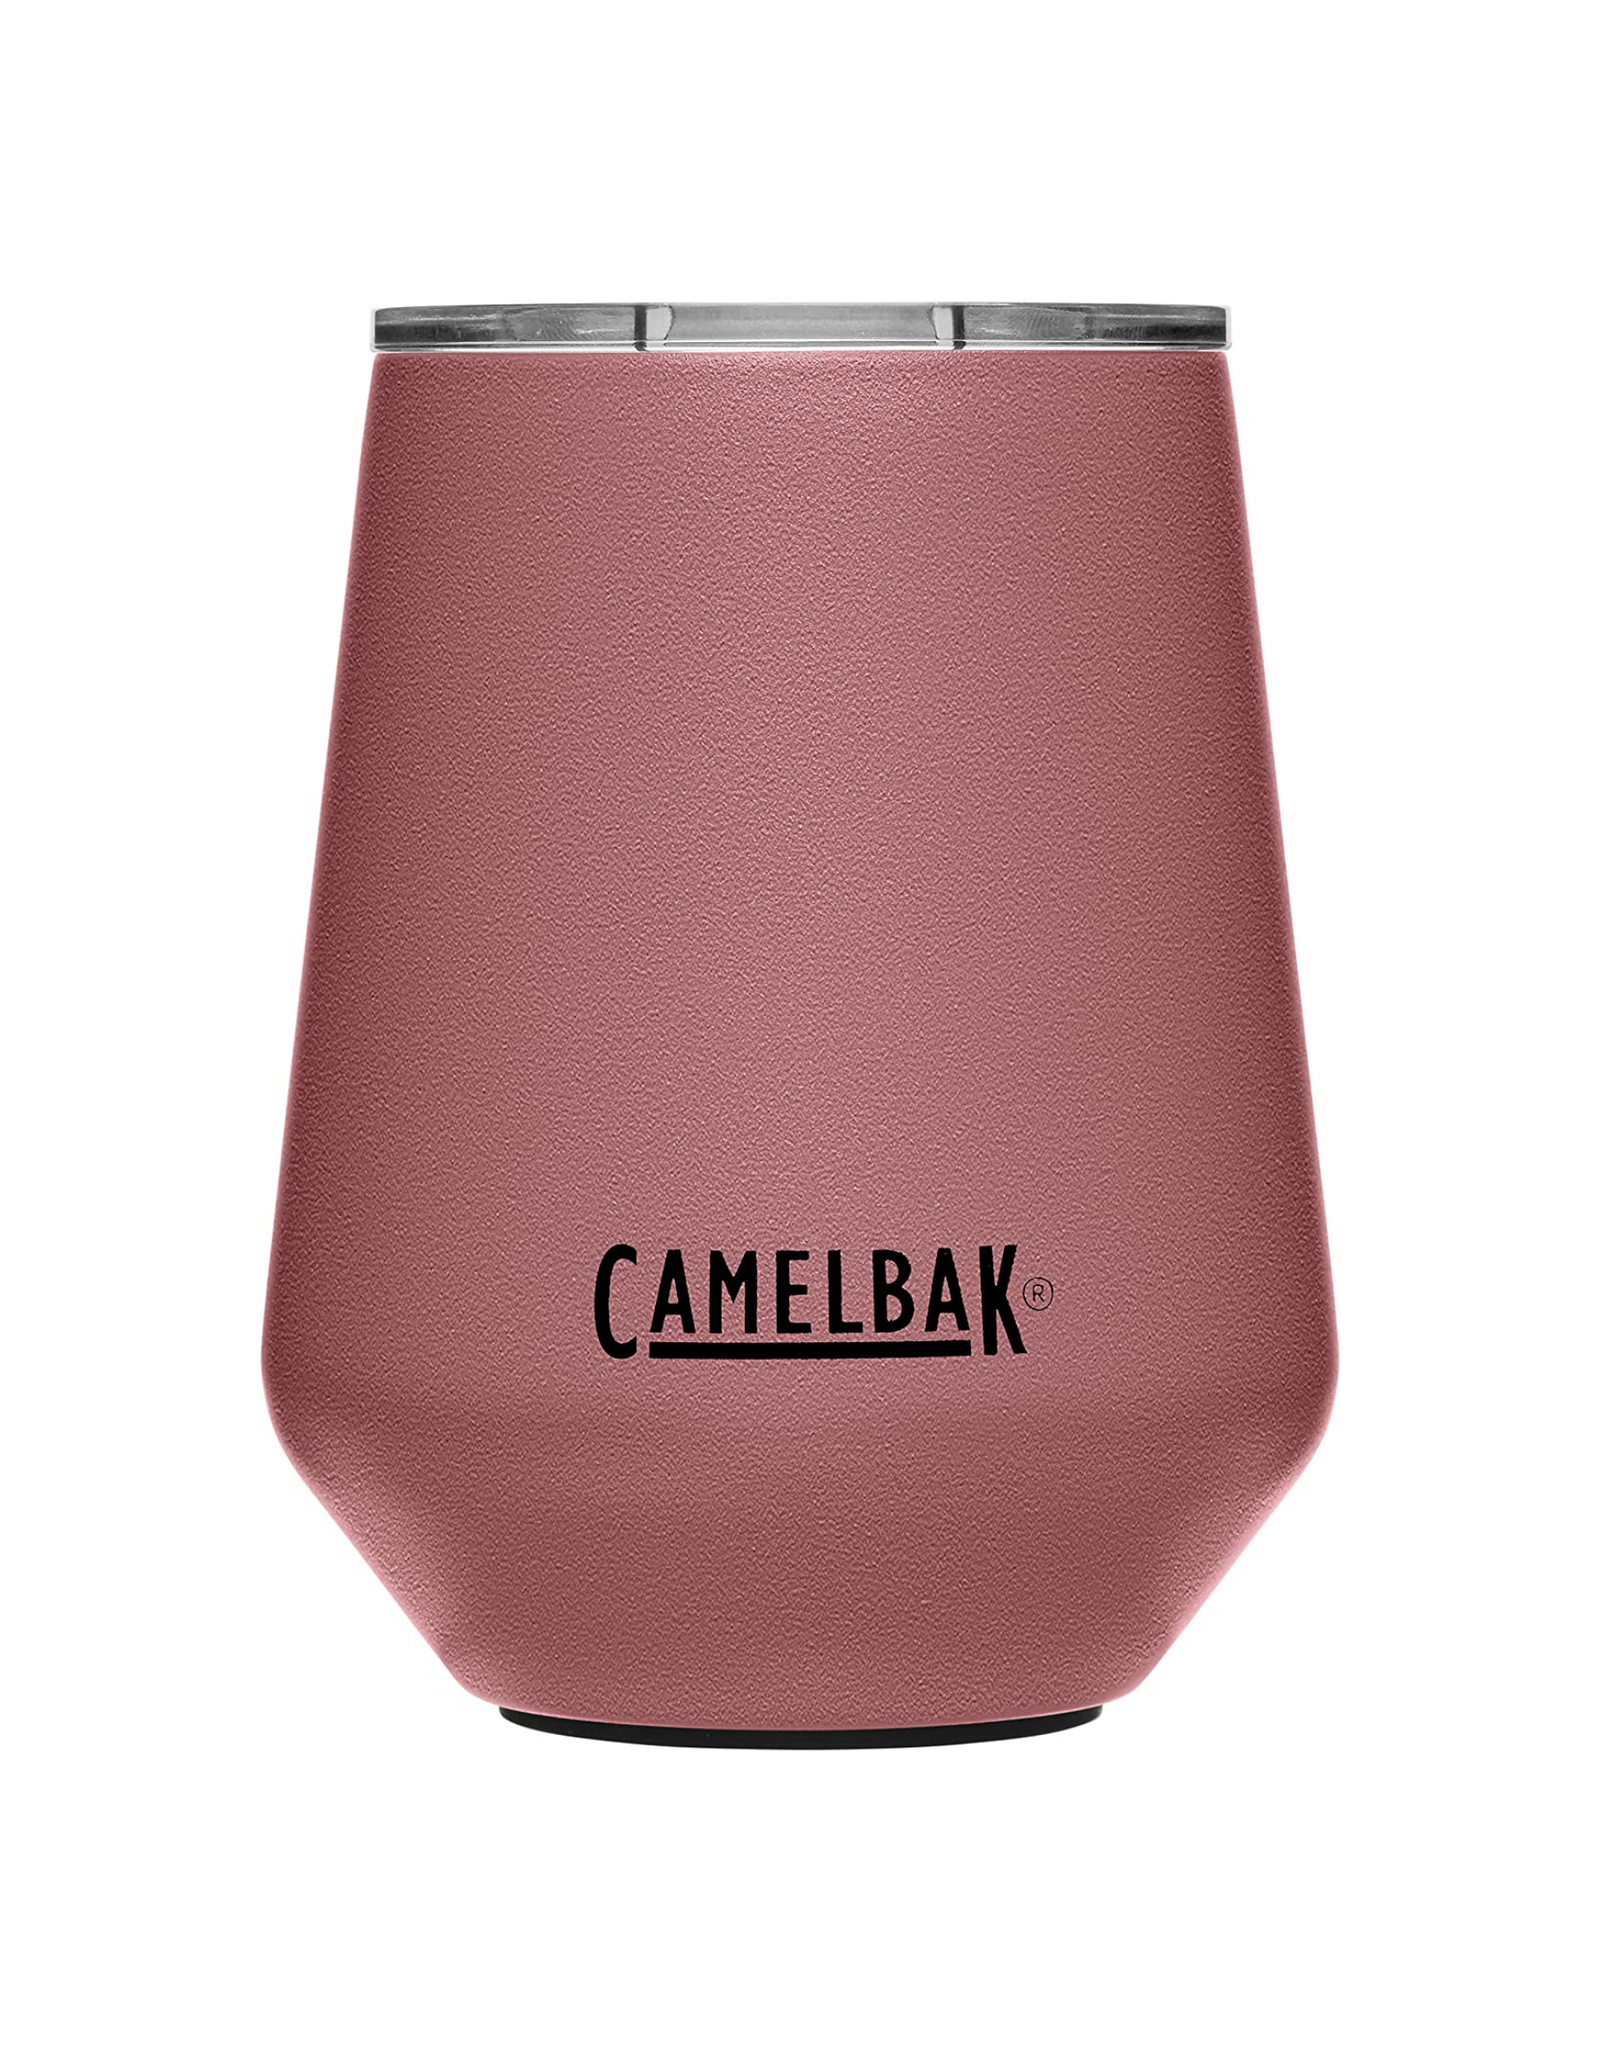 CamelBak Horizon 12 oz Tumbler - Insulated Stainless Steel - Tri-Mode Lid